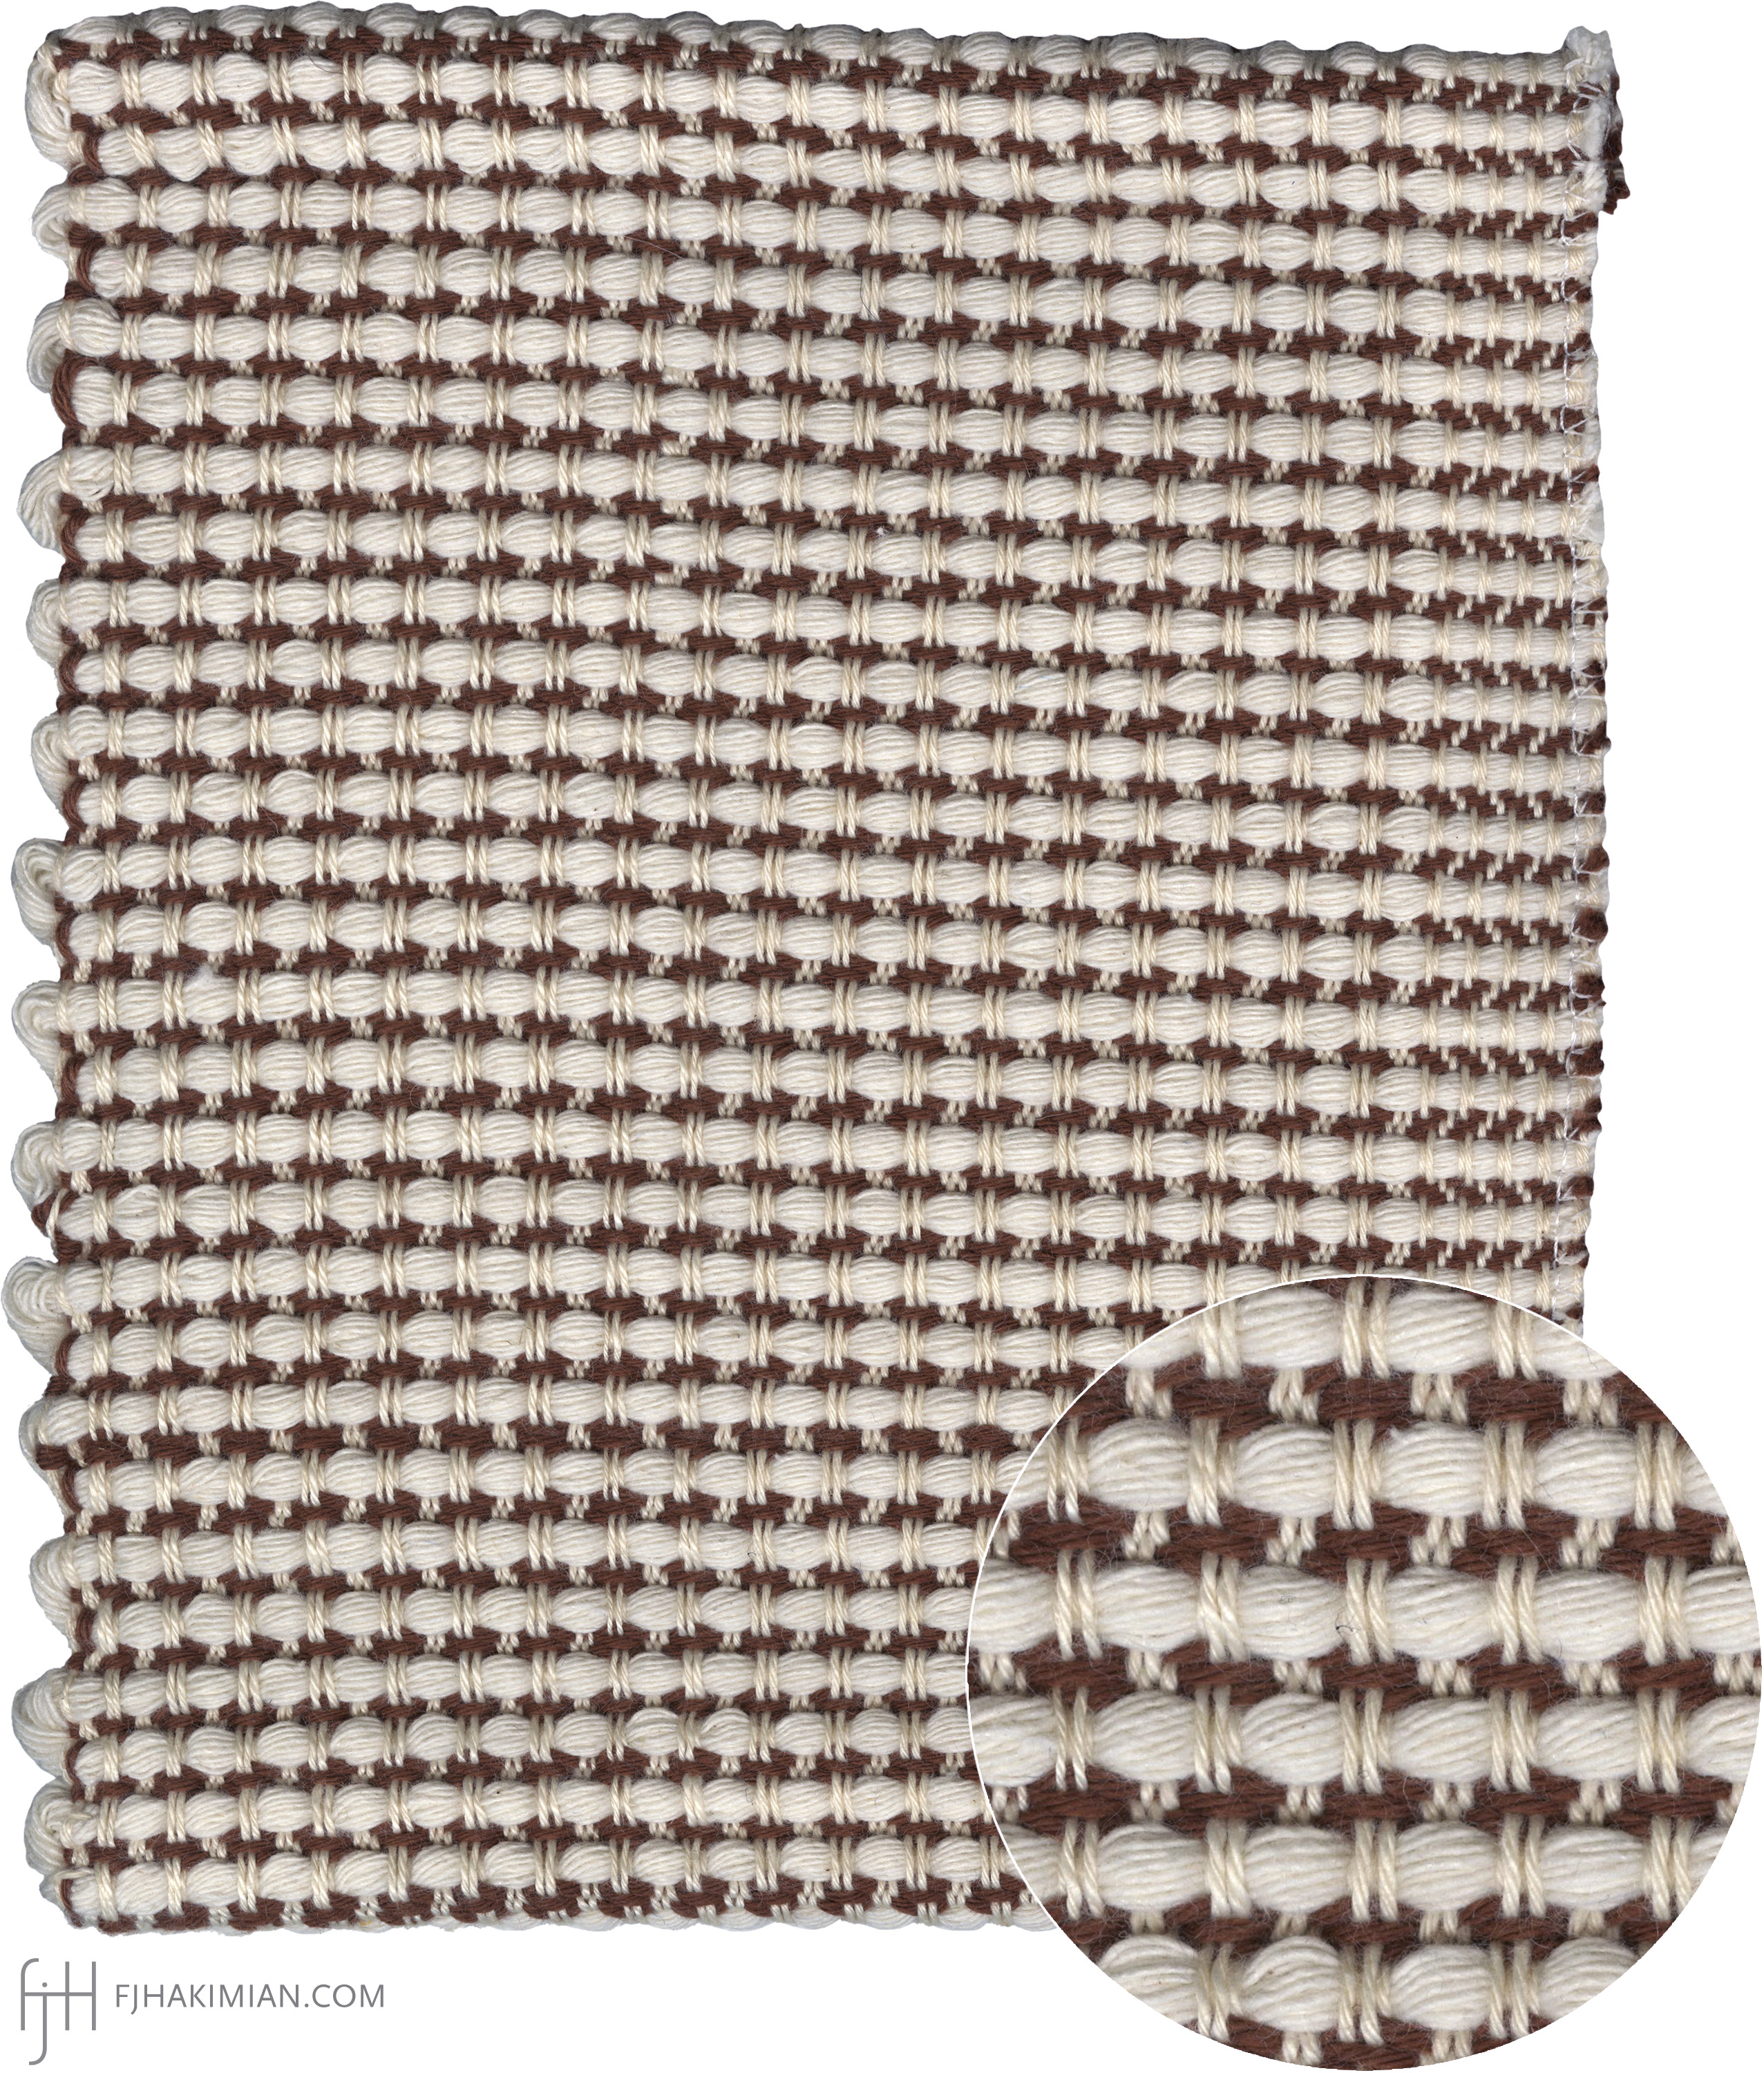 IF-Sardinian Brown Design | Custom Sardinian Carpet | FJ Hakimian | Carpet Gallery in NYC